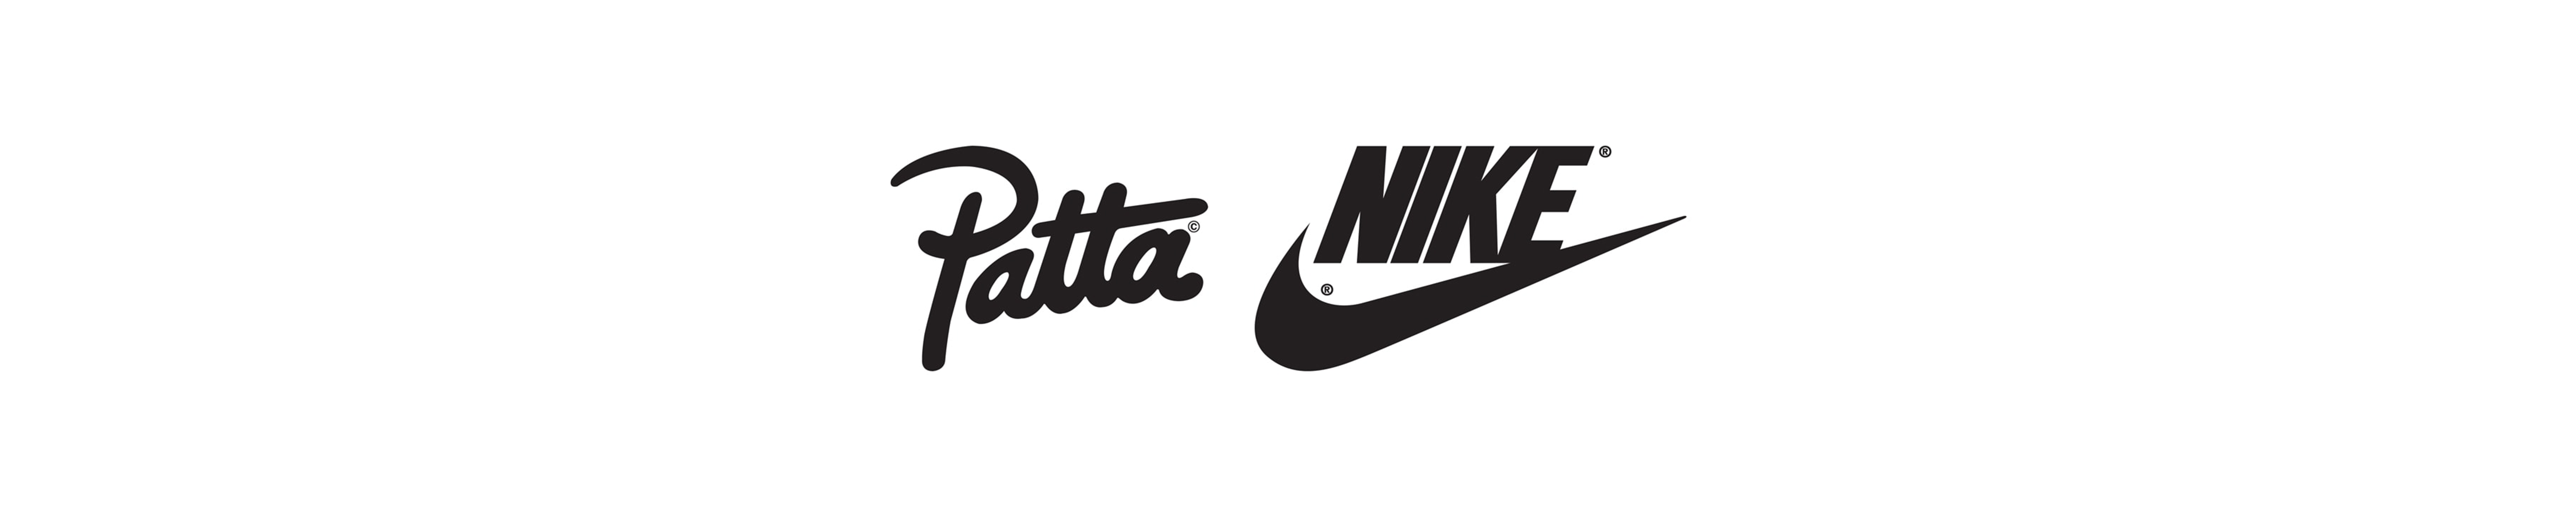 Patta x Nike durchg Running